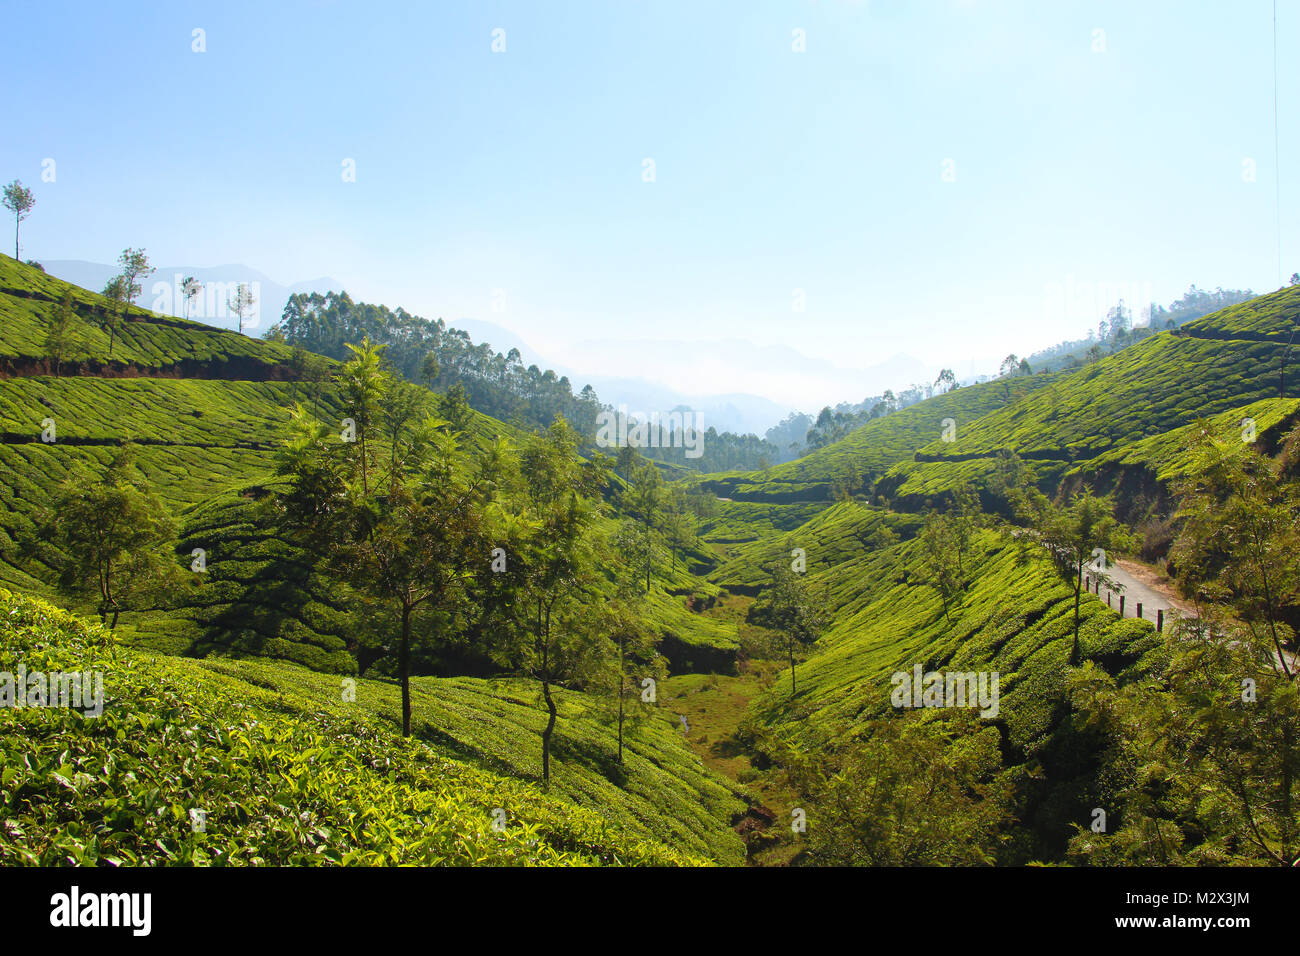 Tea plantation landscape with road to mountain Stock Photo